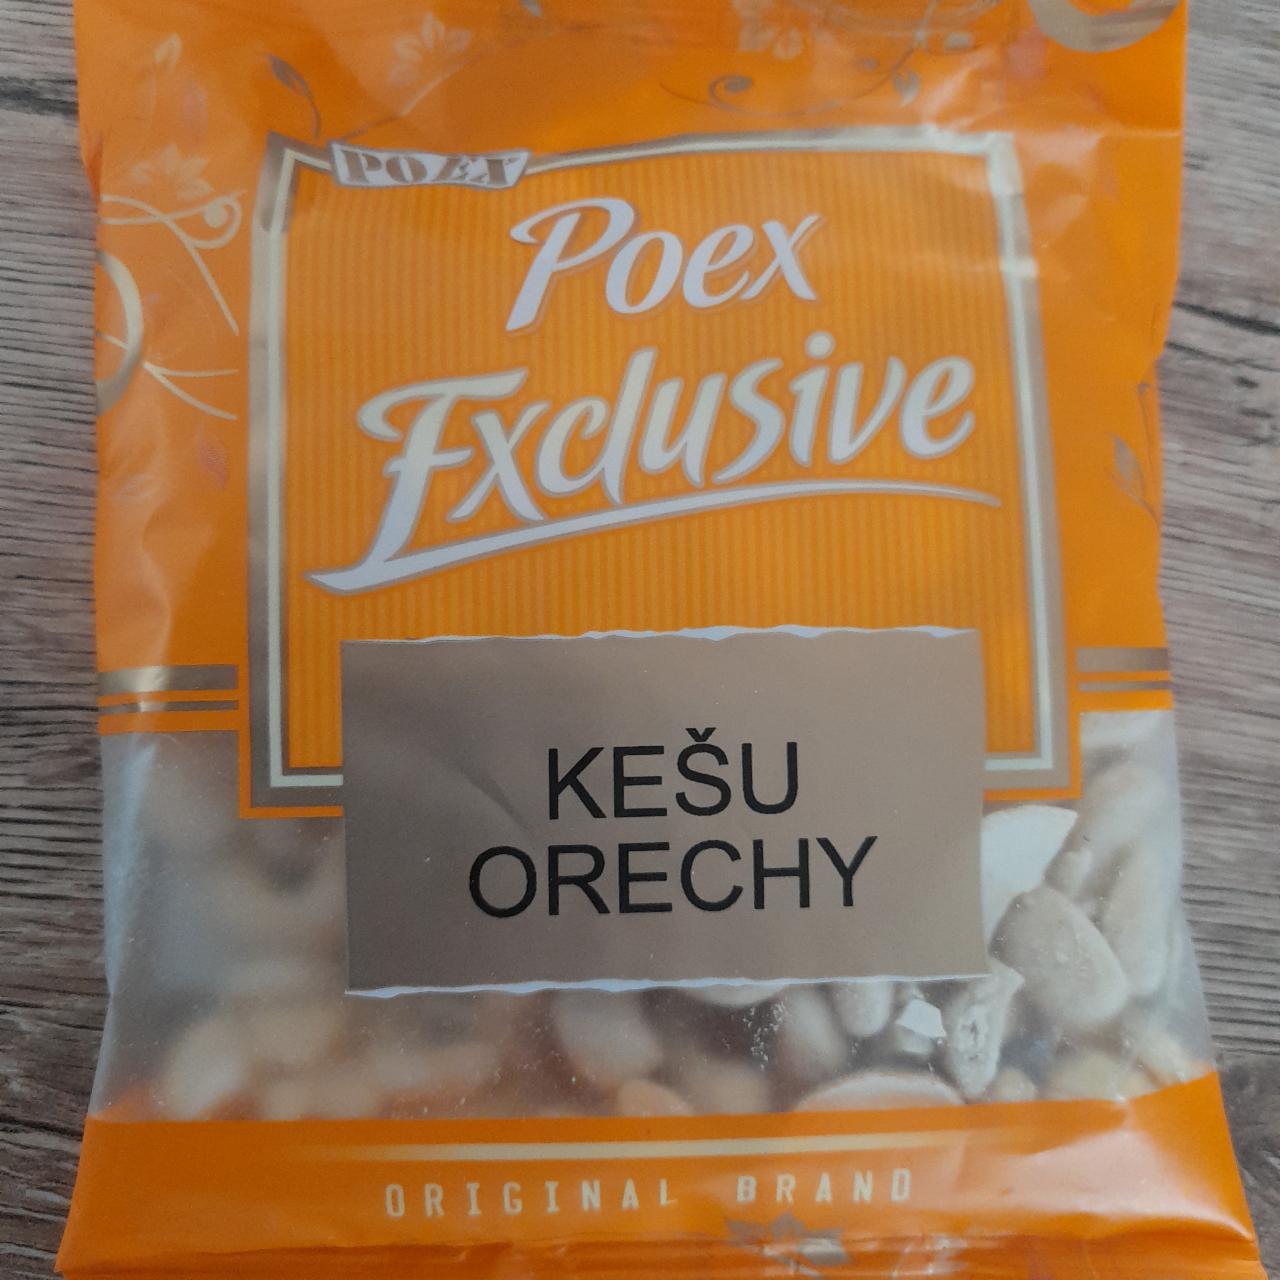 Fotografie - Kešu Orechy Poex Exclusive